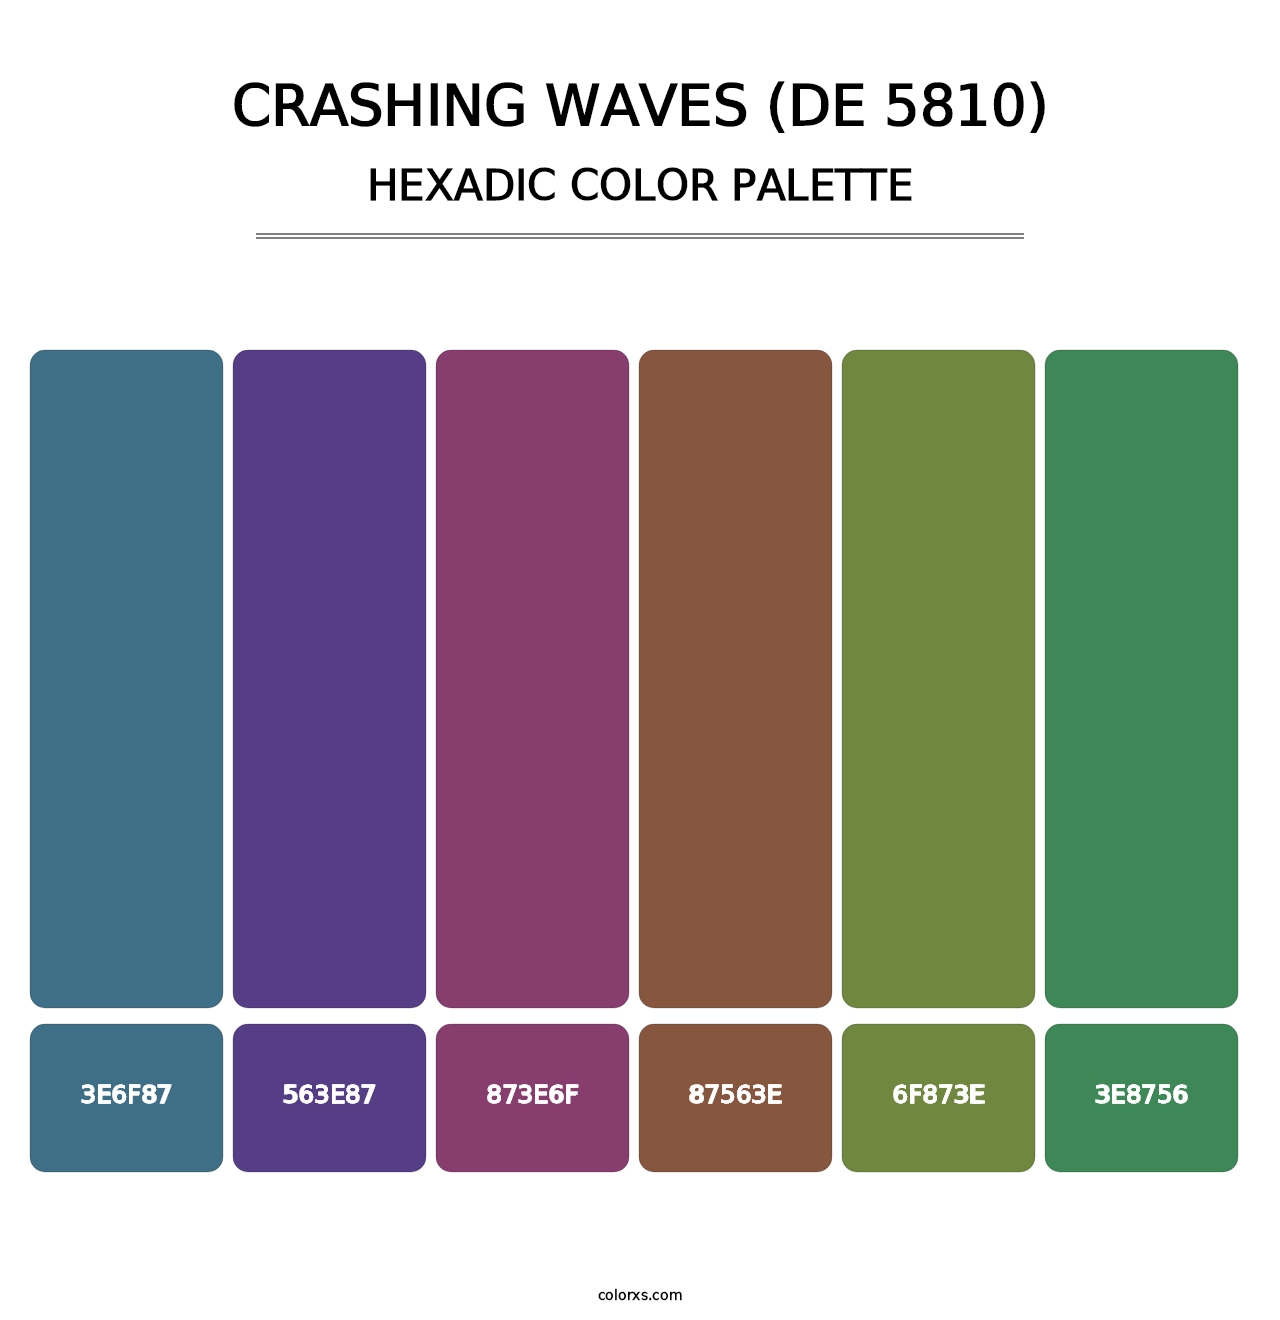 Crashing Waves (DE 5810) - Hexadic Color Palette